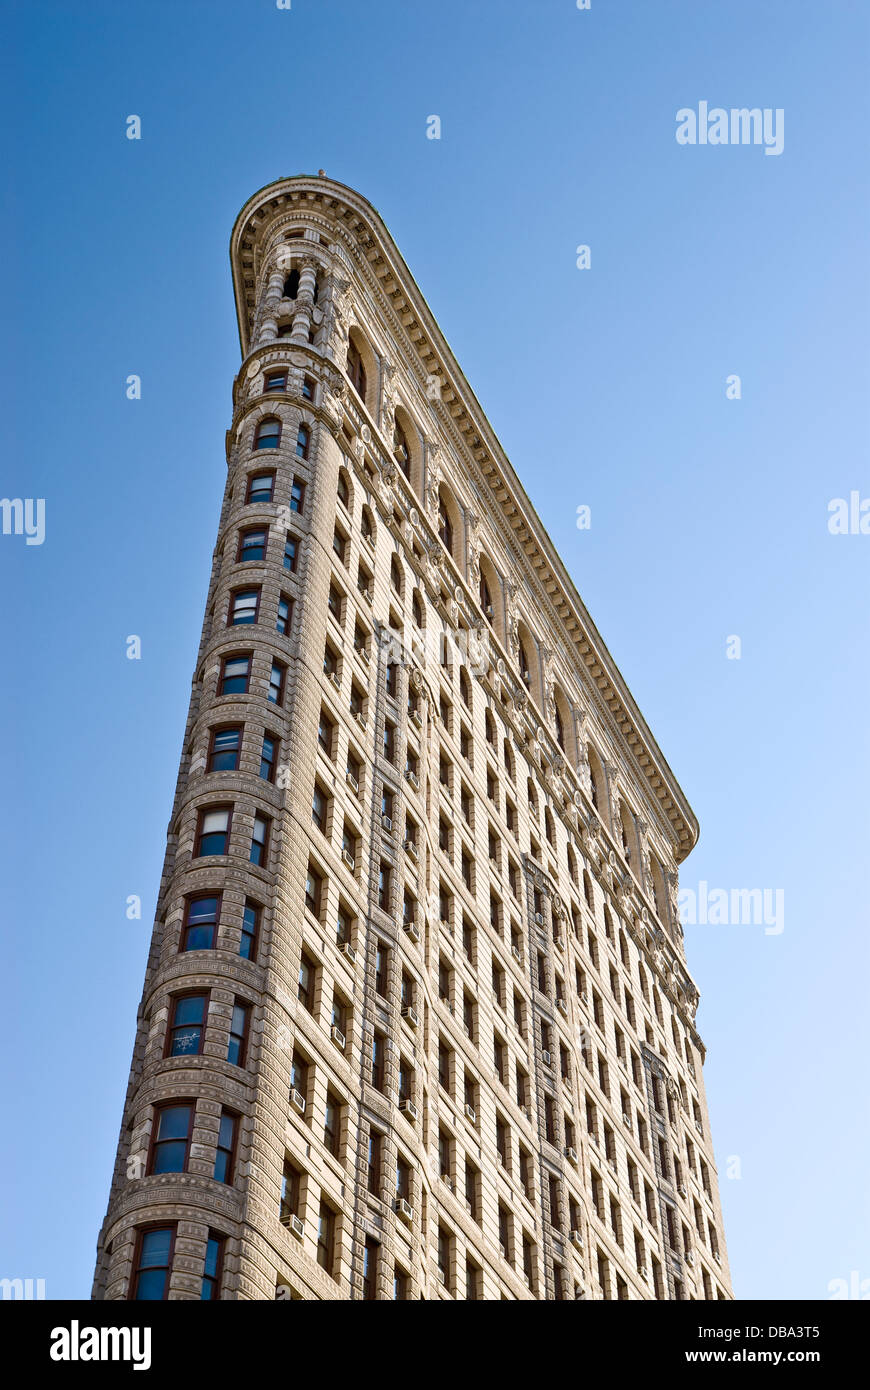 The Flatiron Building, New York City. Stock Photo